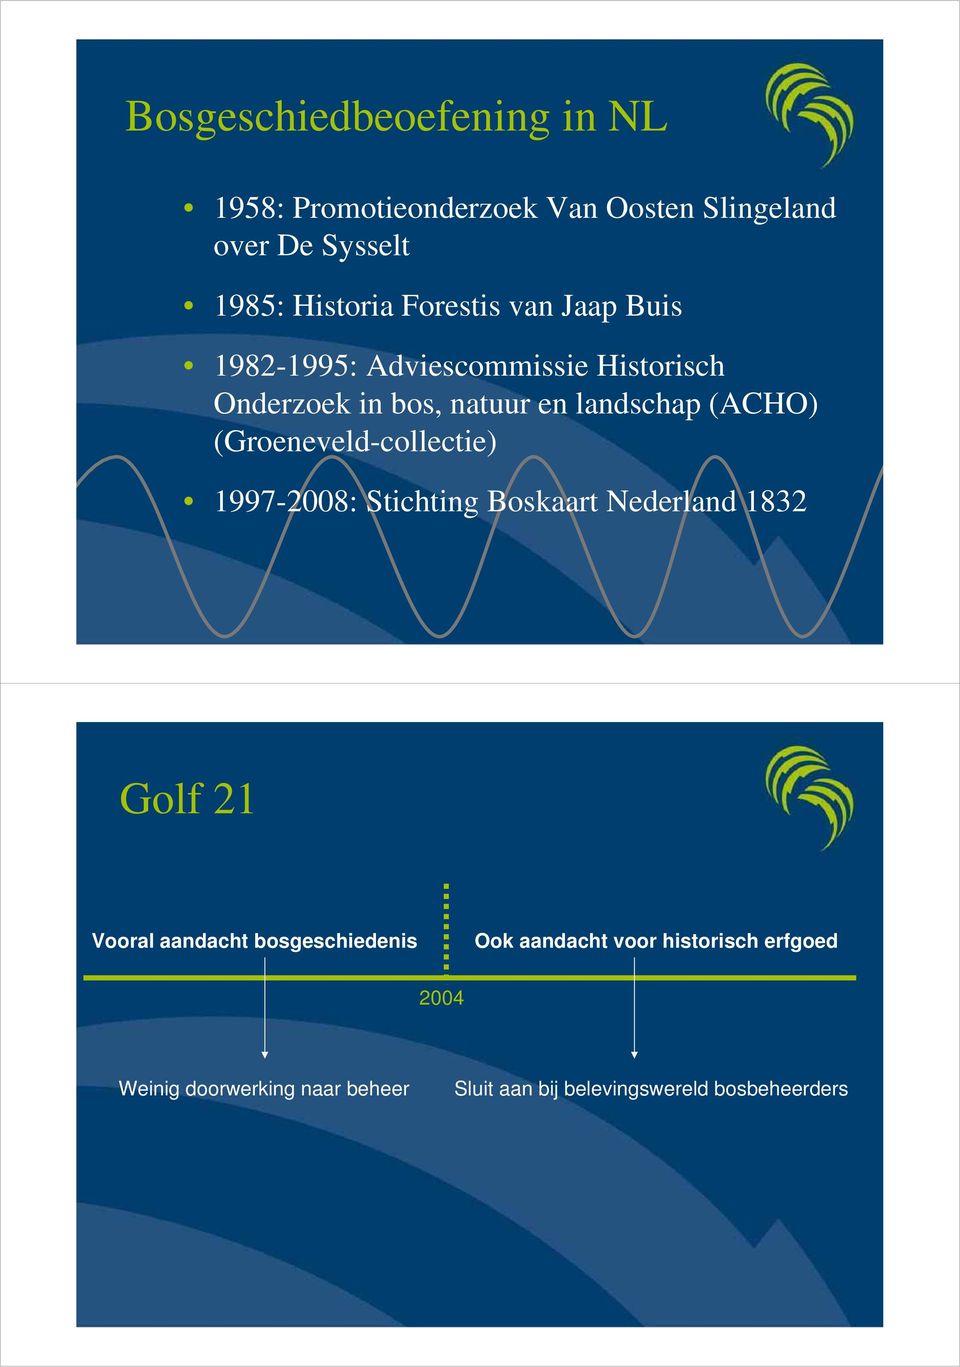 (Groeneveld-collectie) 1997-2008: Stichting Boskaart Nederland 1832 Golf 21 Vooral aandacht bosgeschiedenis